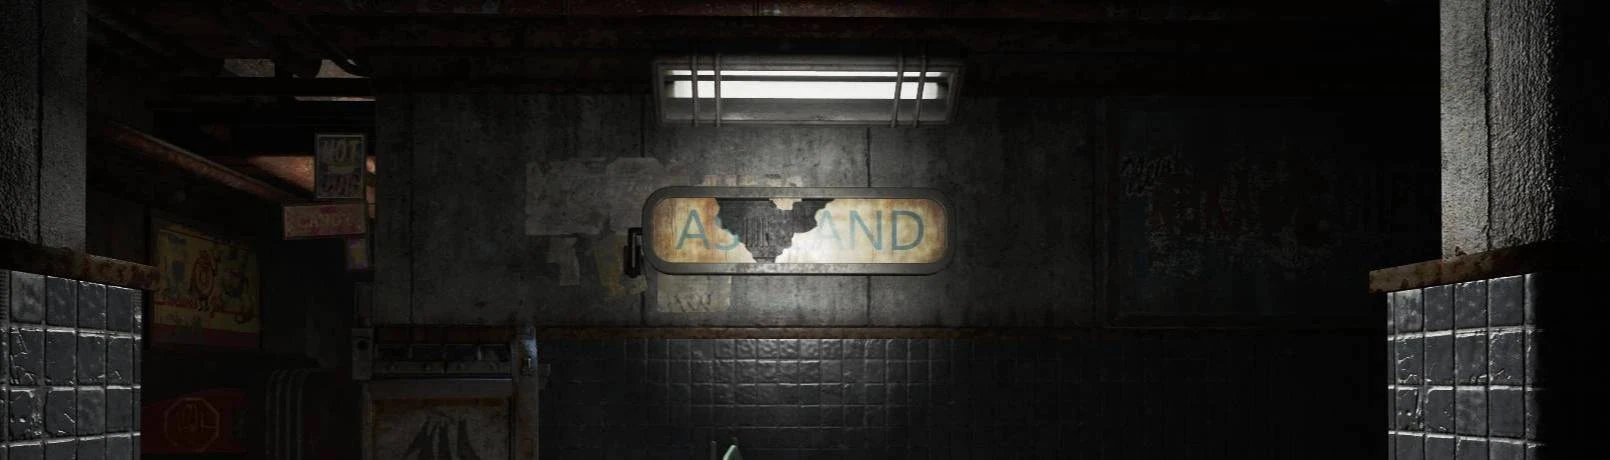 Ashland Station - Quest-Dungeon-Settlement German at Fallout 4 Nexus ...